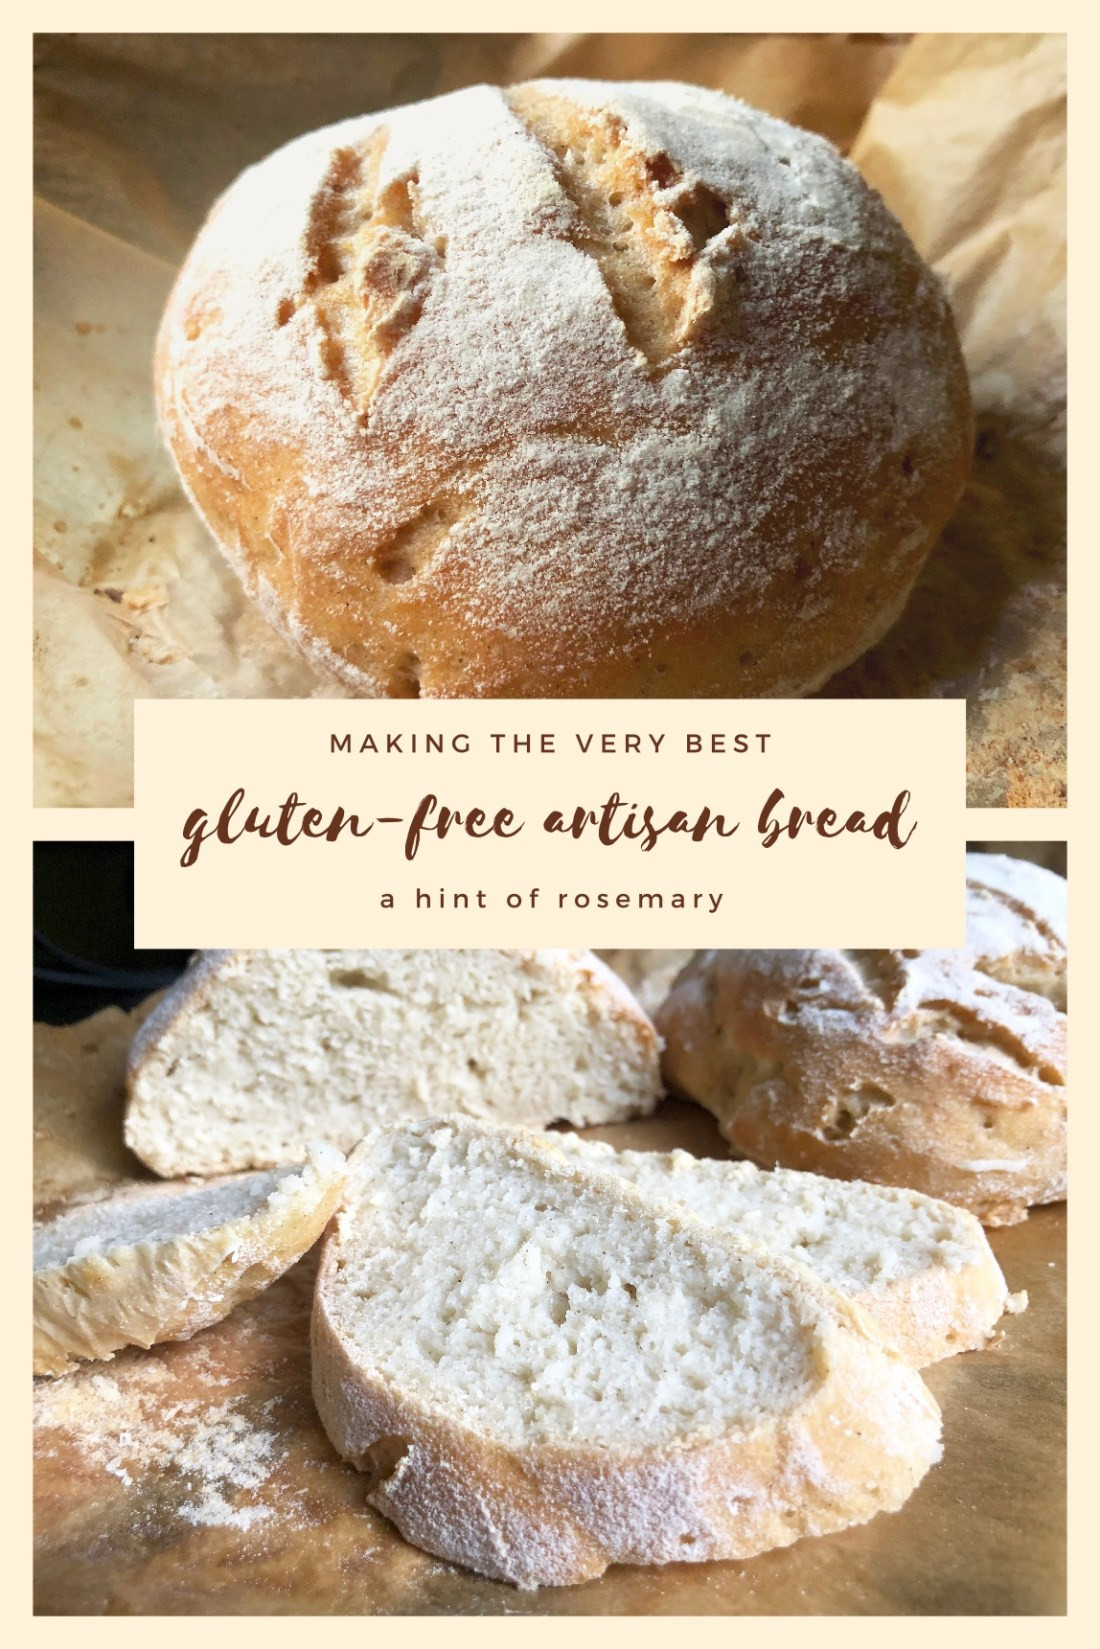 Artisan Gluten Free Bread
 gluten free artisan bread – a hint of rosemary